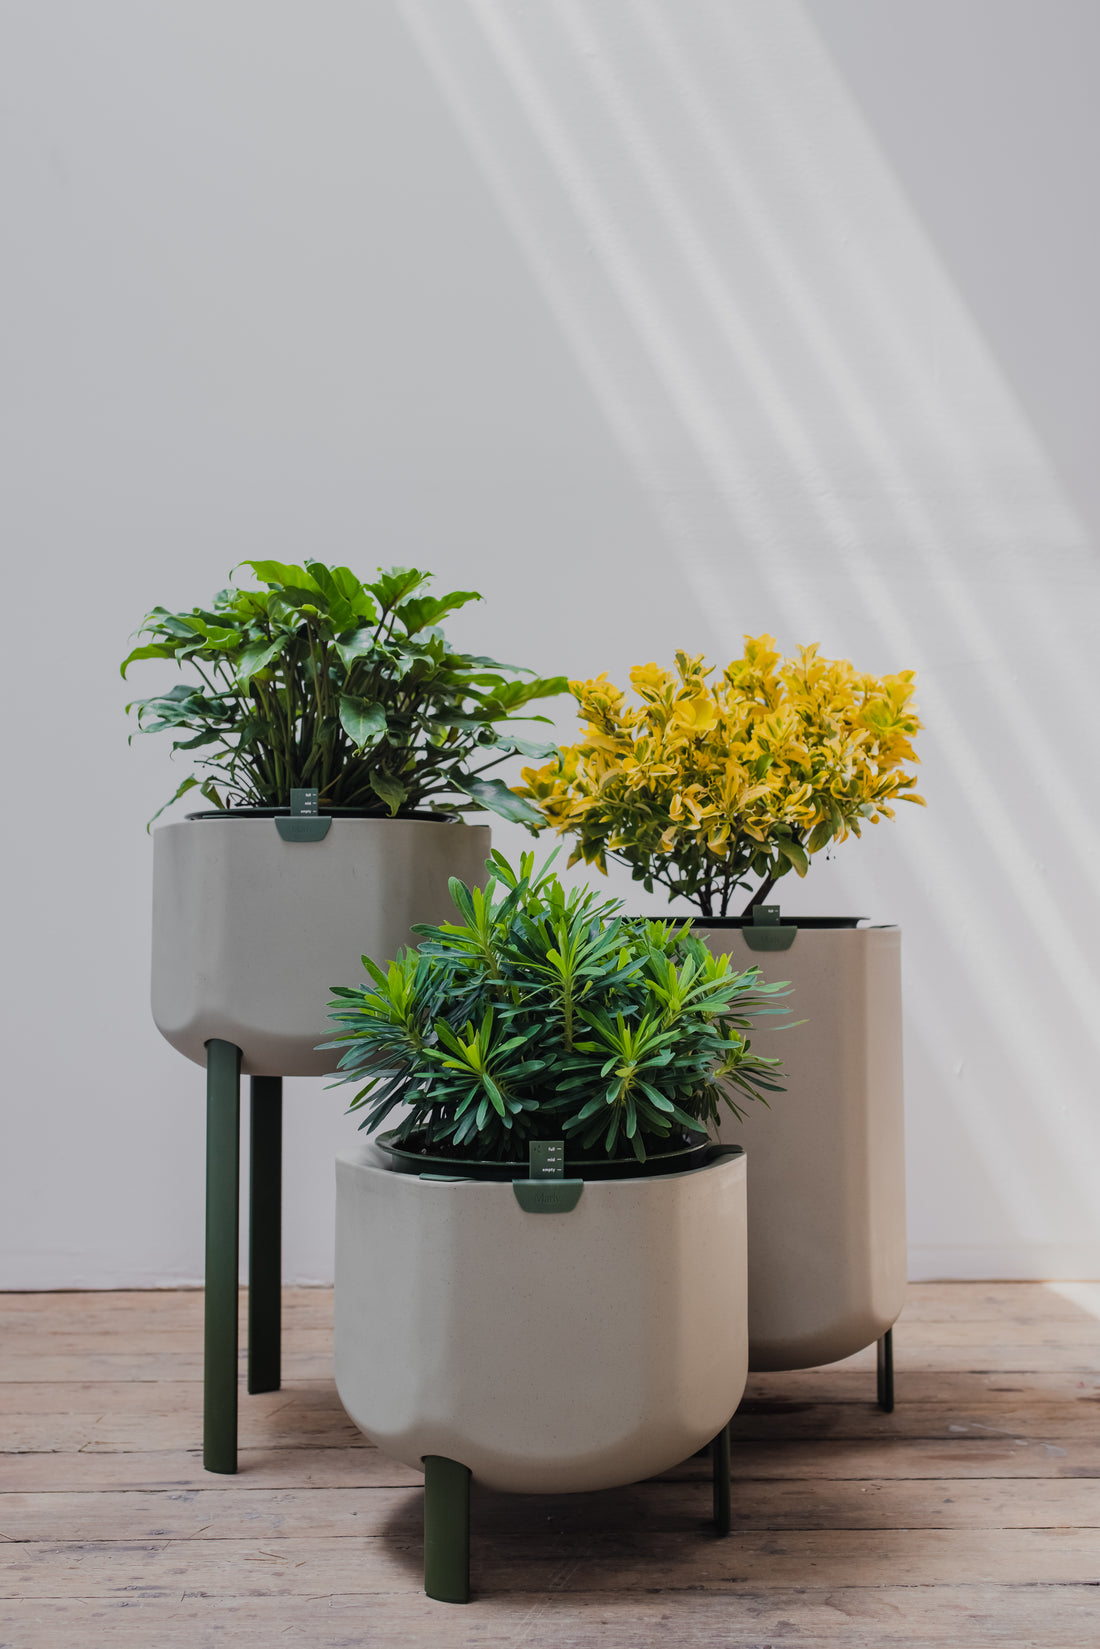 Three stylish indoor gardening planters with fresh looking green plants inside